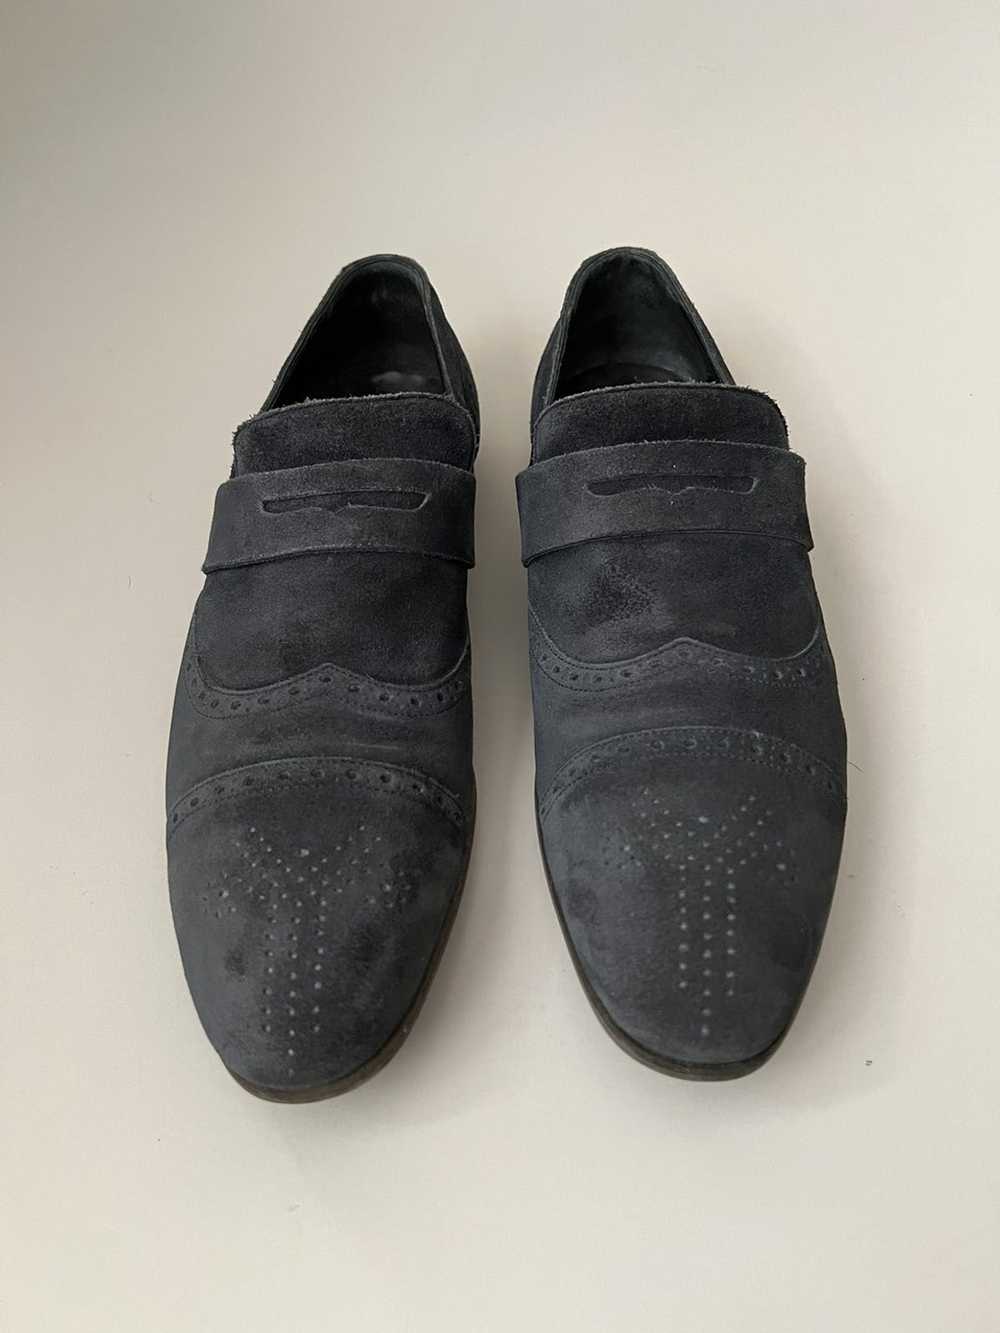 Yves Saint Laurent YSL suede shoes - image 8